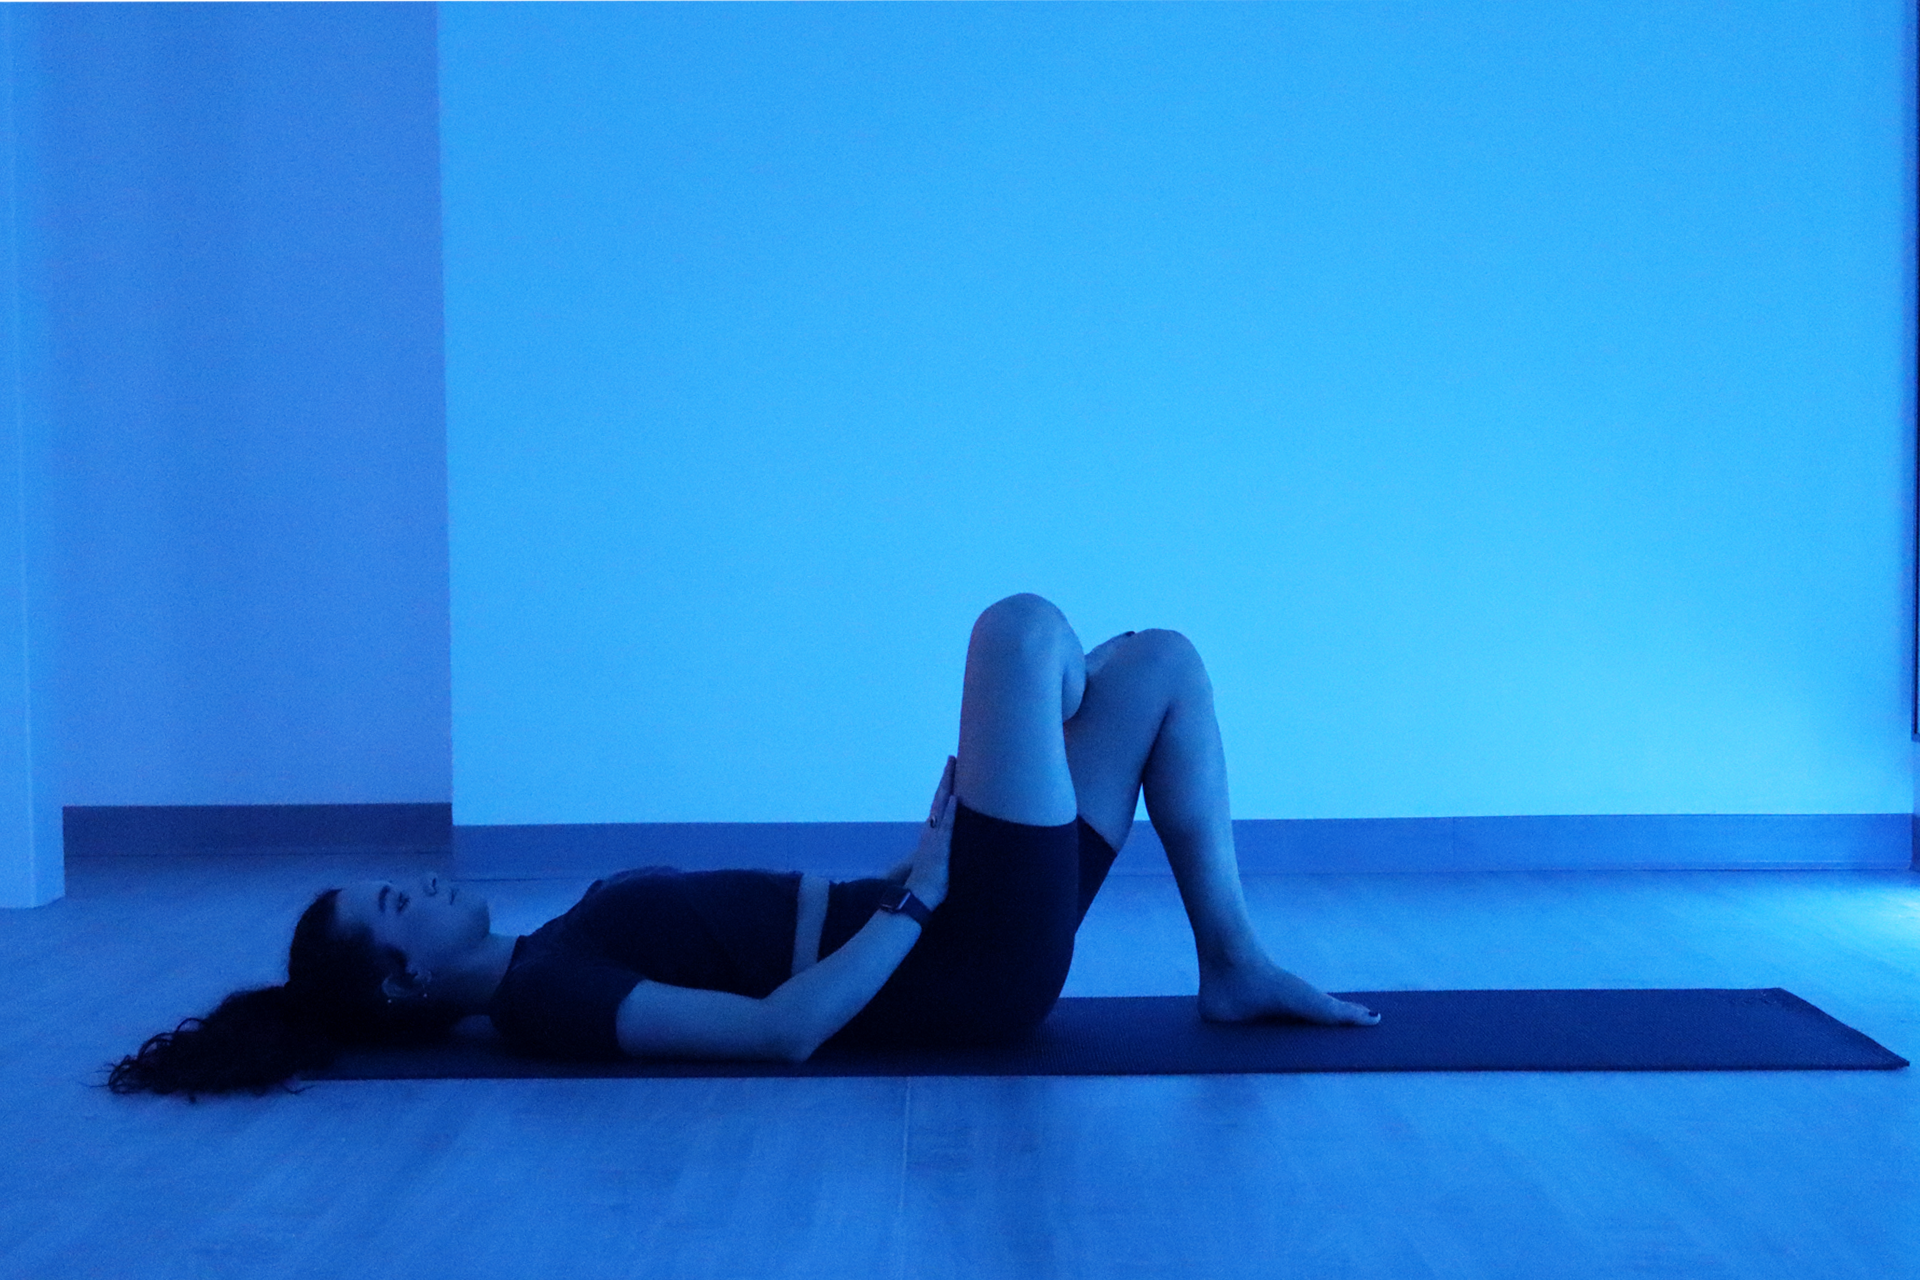 Massage & Yoga Portland - Horizon Lunge! 😍 This pose does wonders